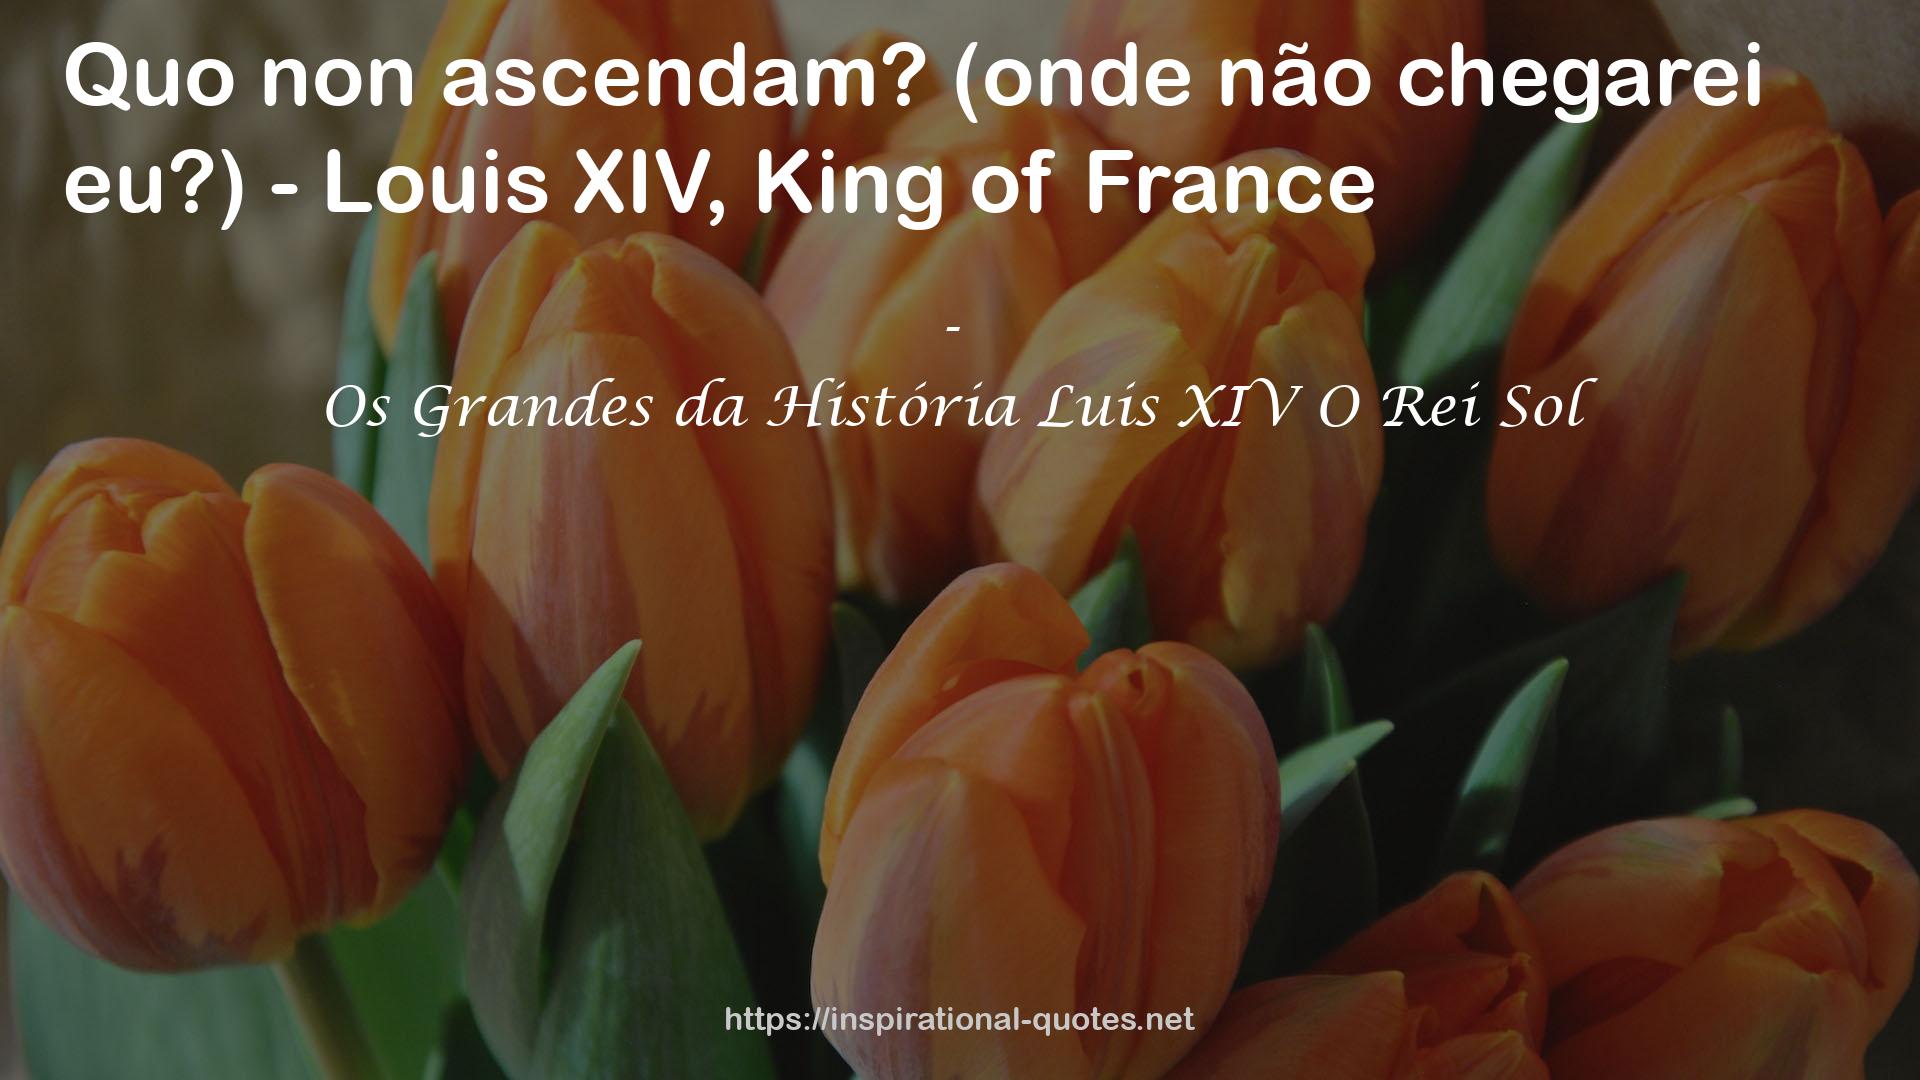 Os Grandes da História Luis XIV O Rei Sol QUOTES